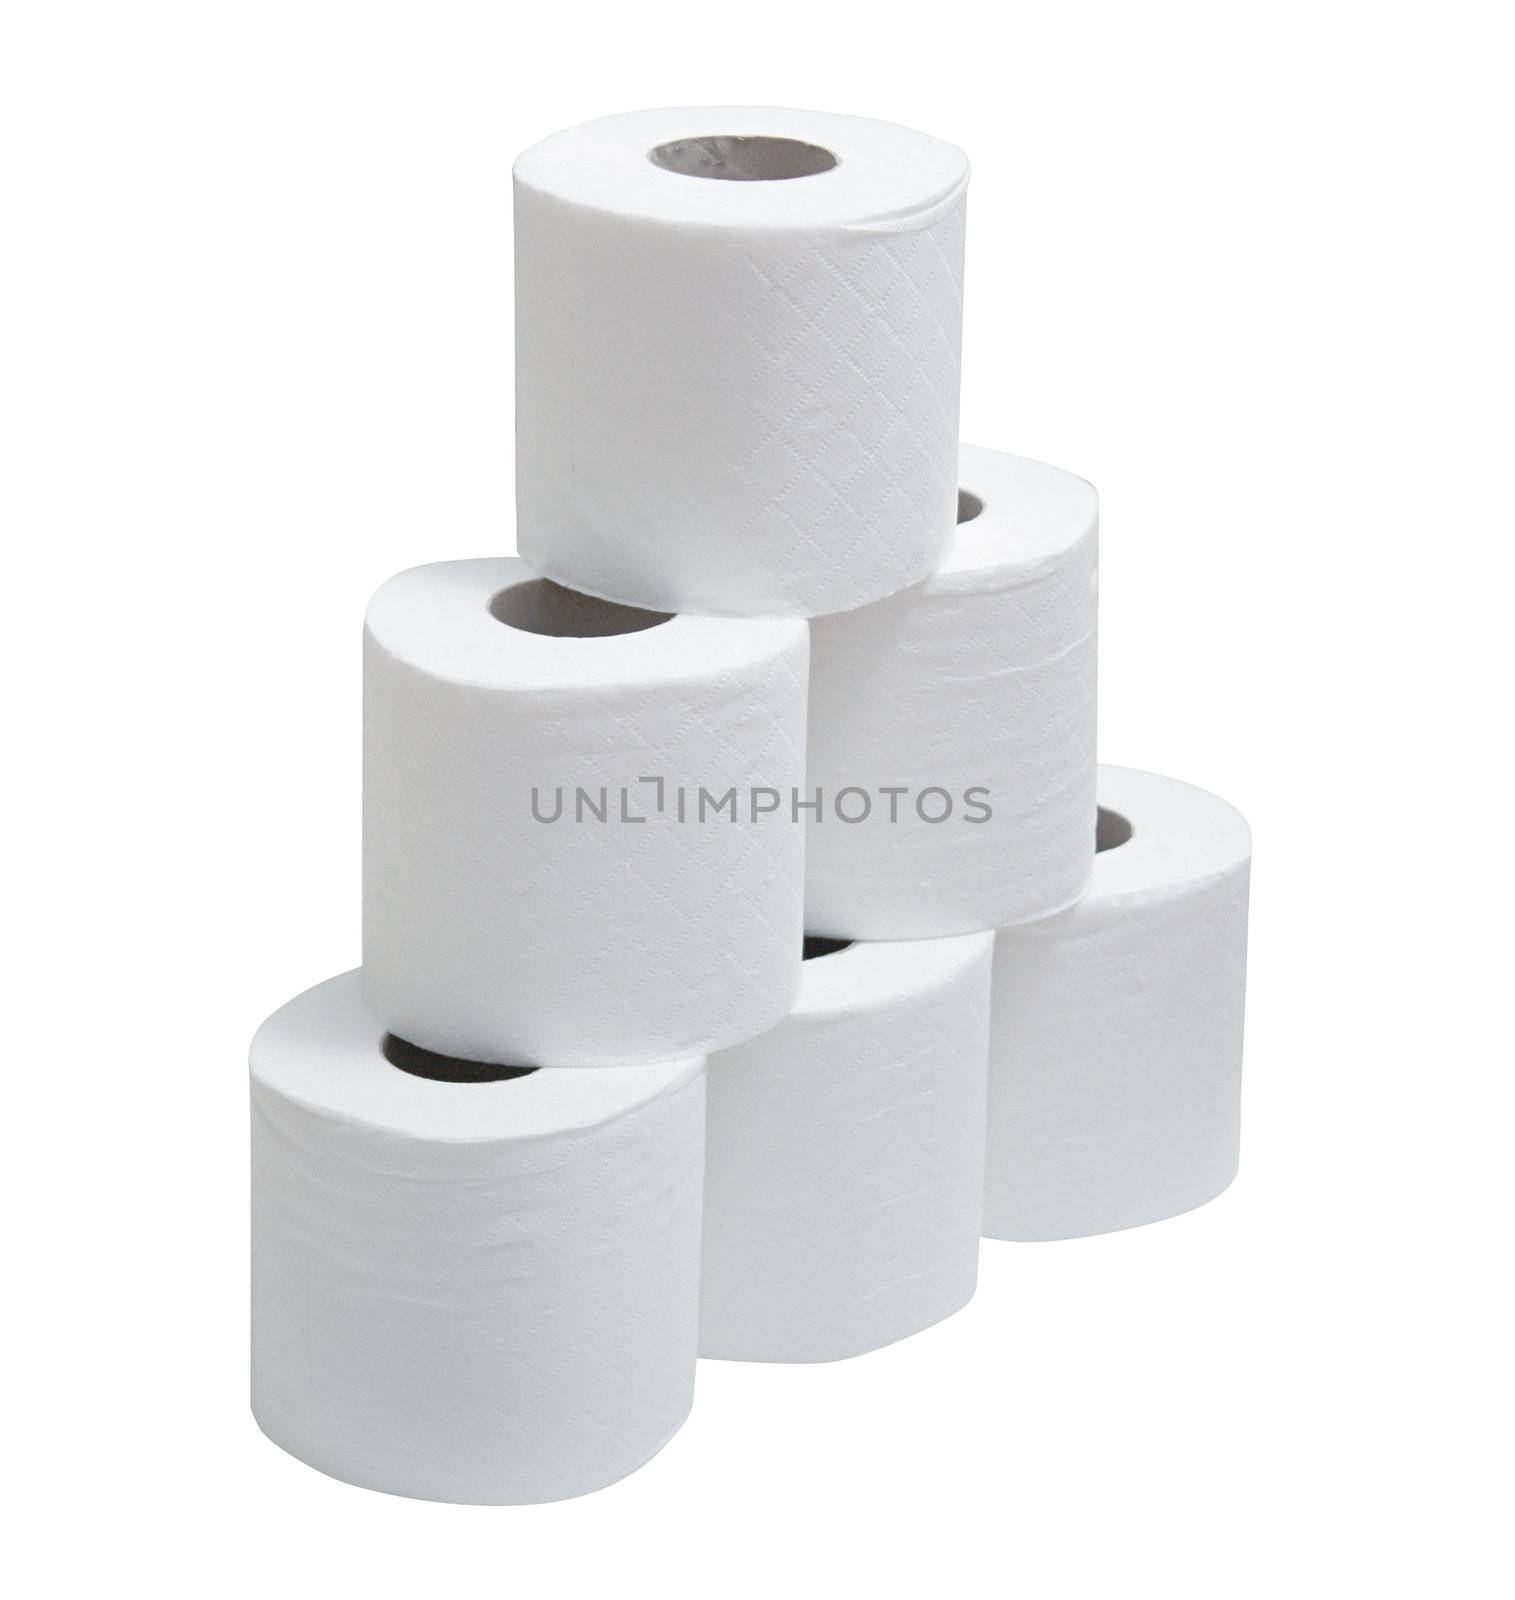 Pyramid toilet paper by leeser